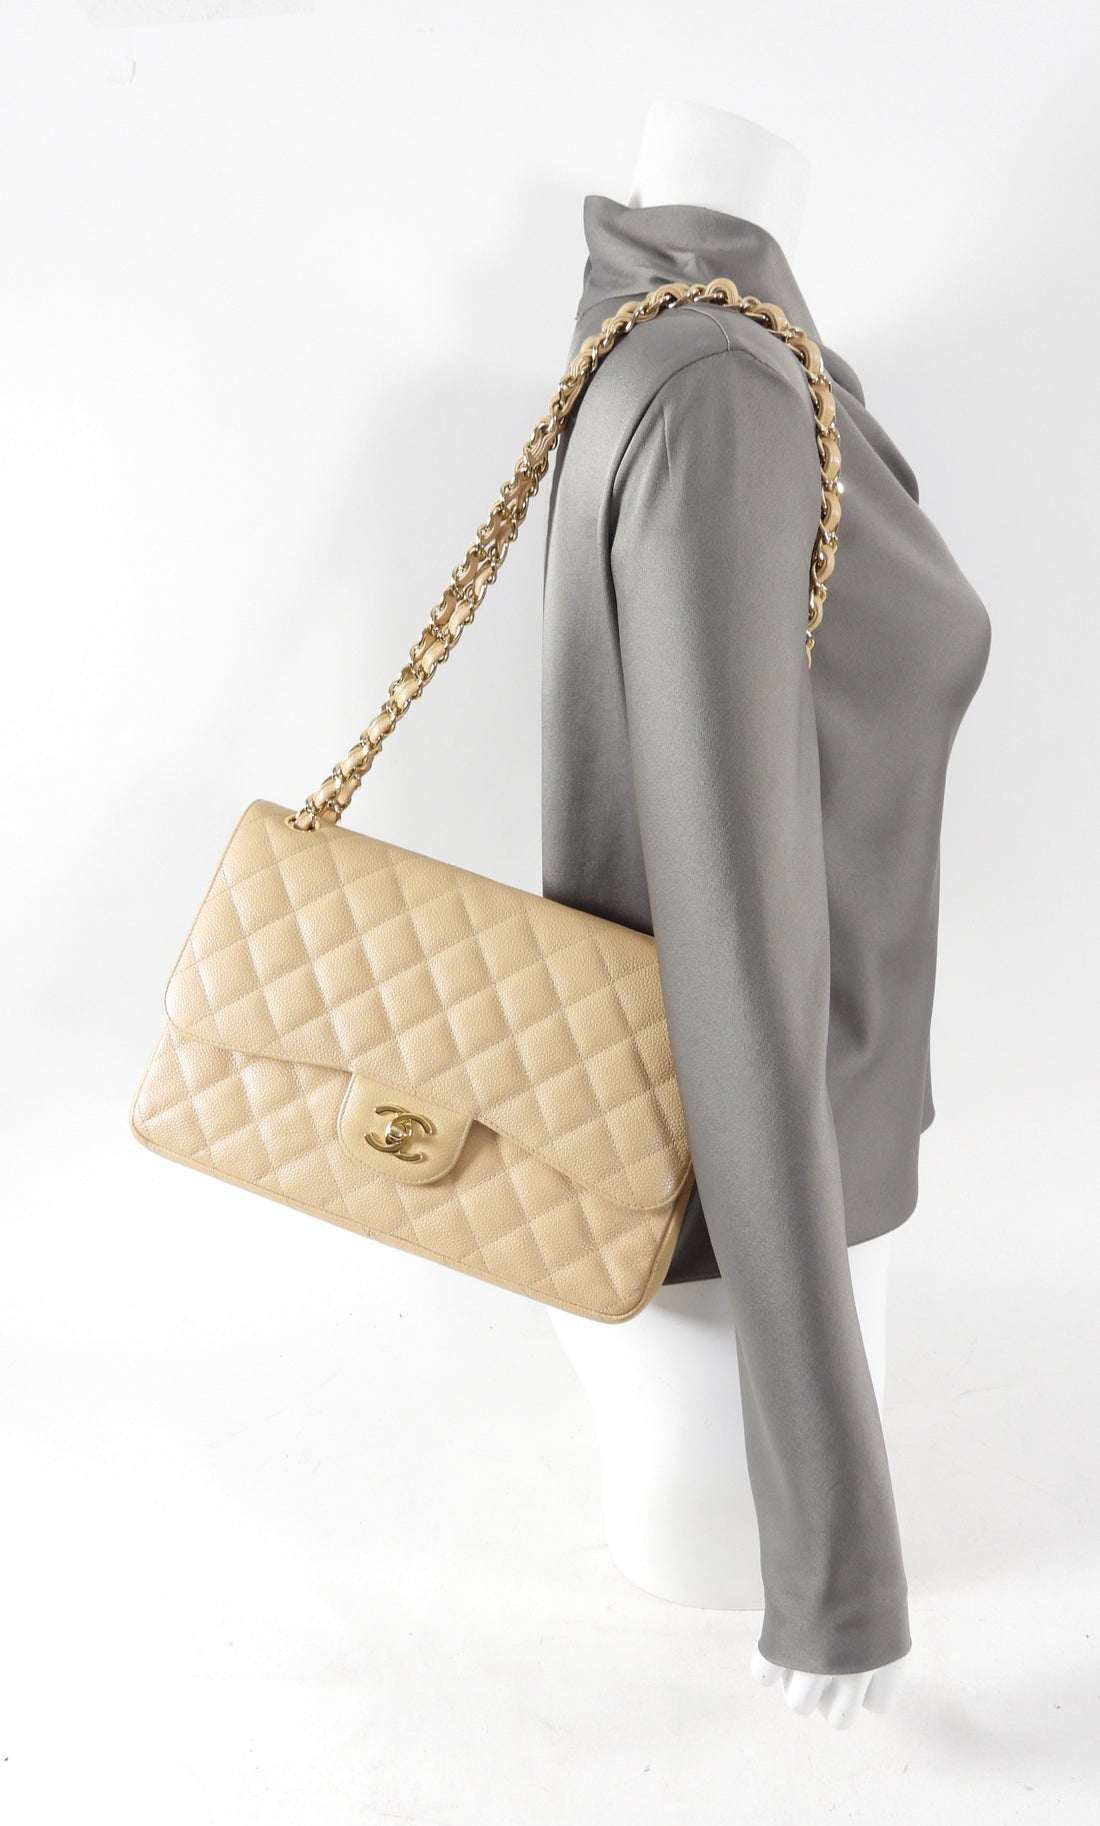 Chanel Beige Caviar Jumbo Classic Double Flap GHW Bag